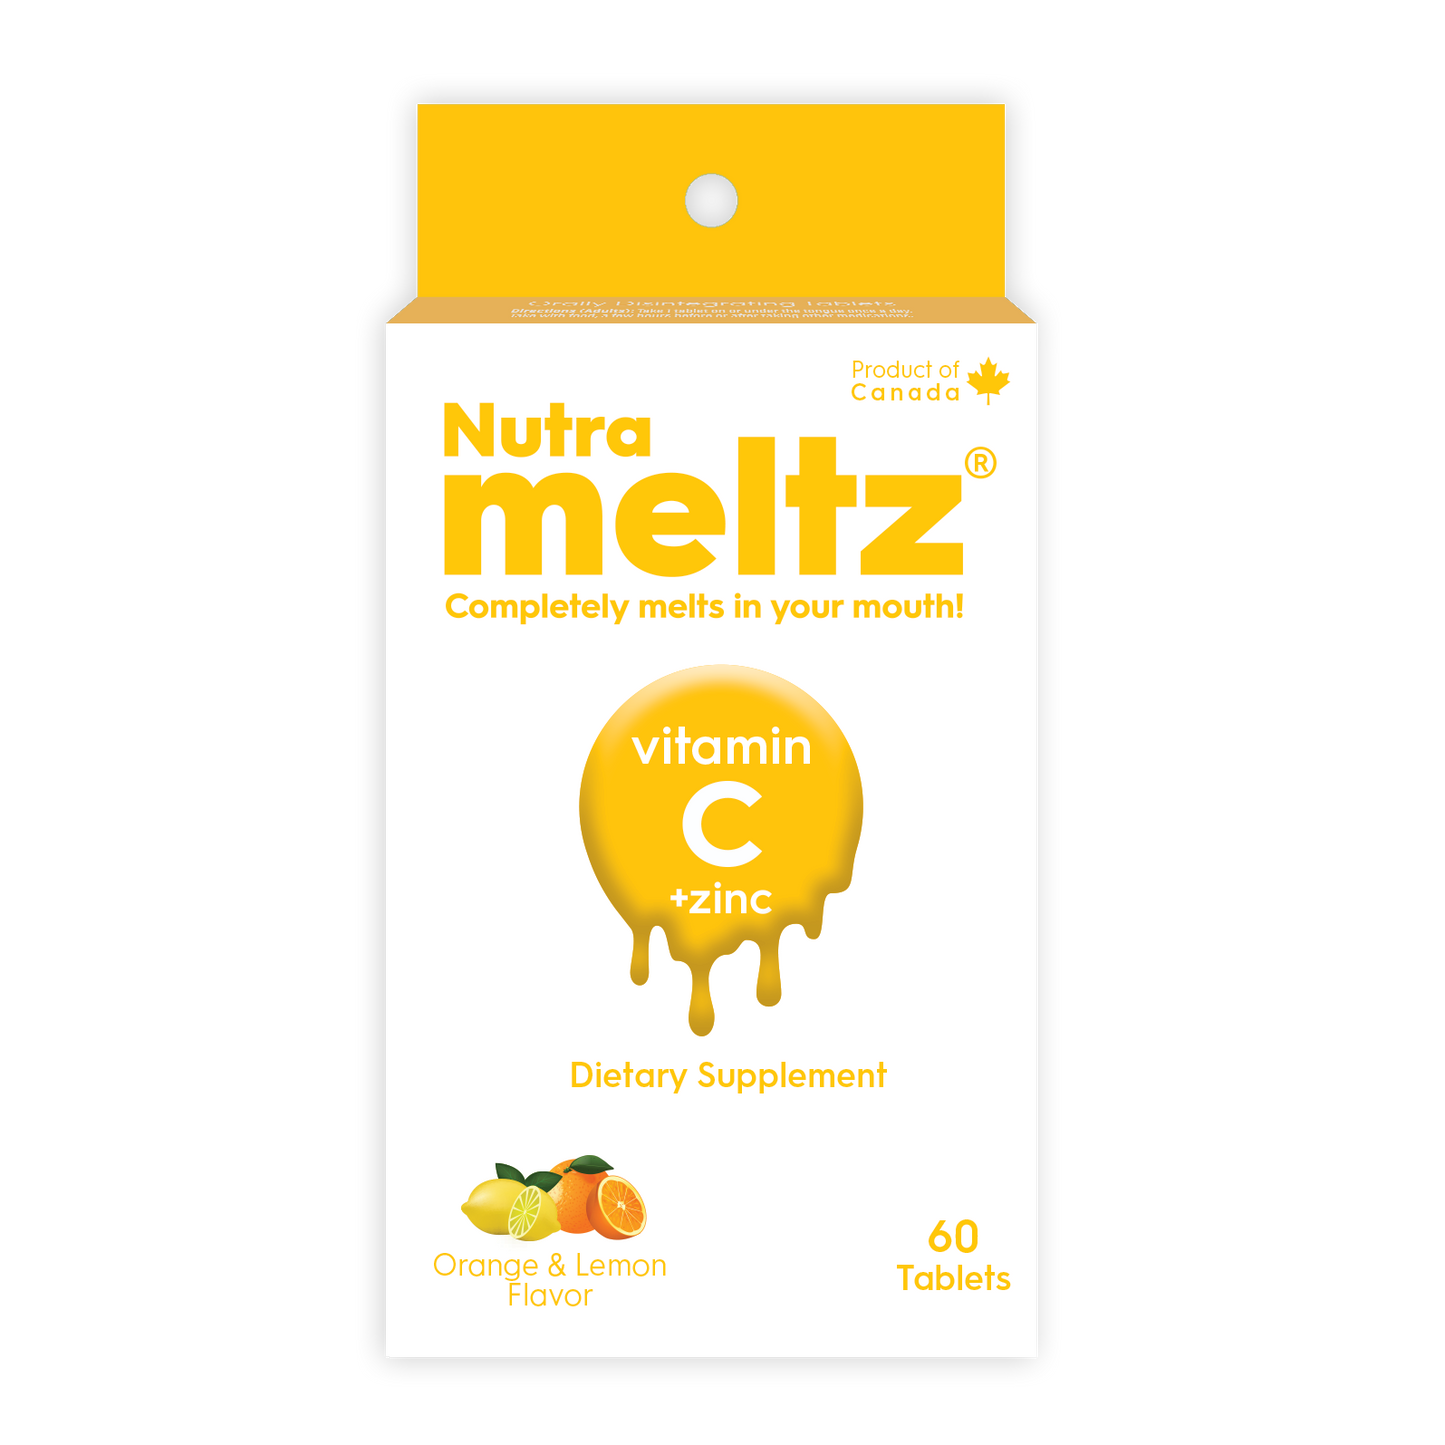 NUTRAMELTZ, INC - Vitamin C + Zinc